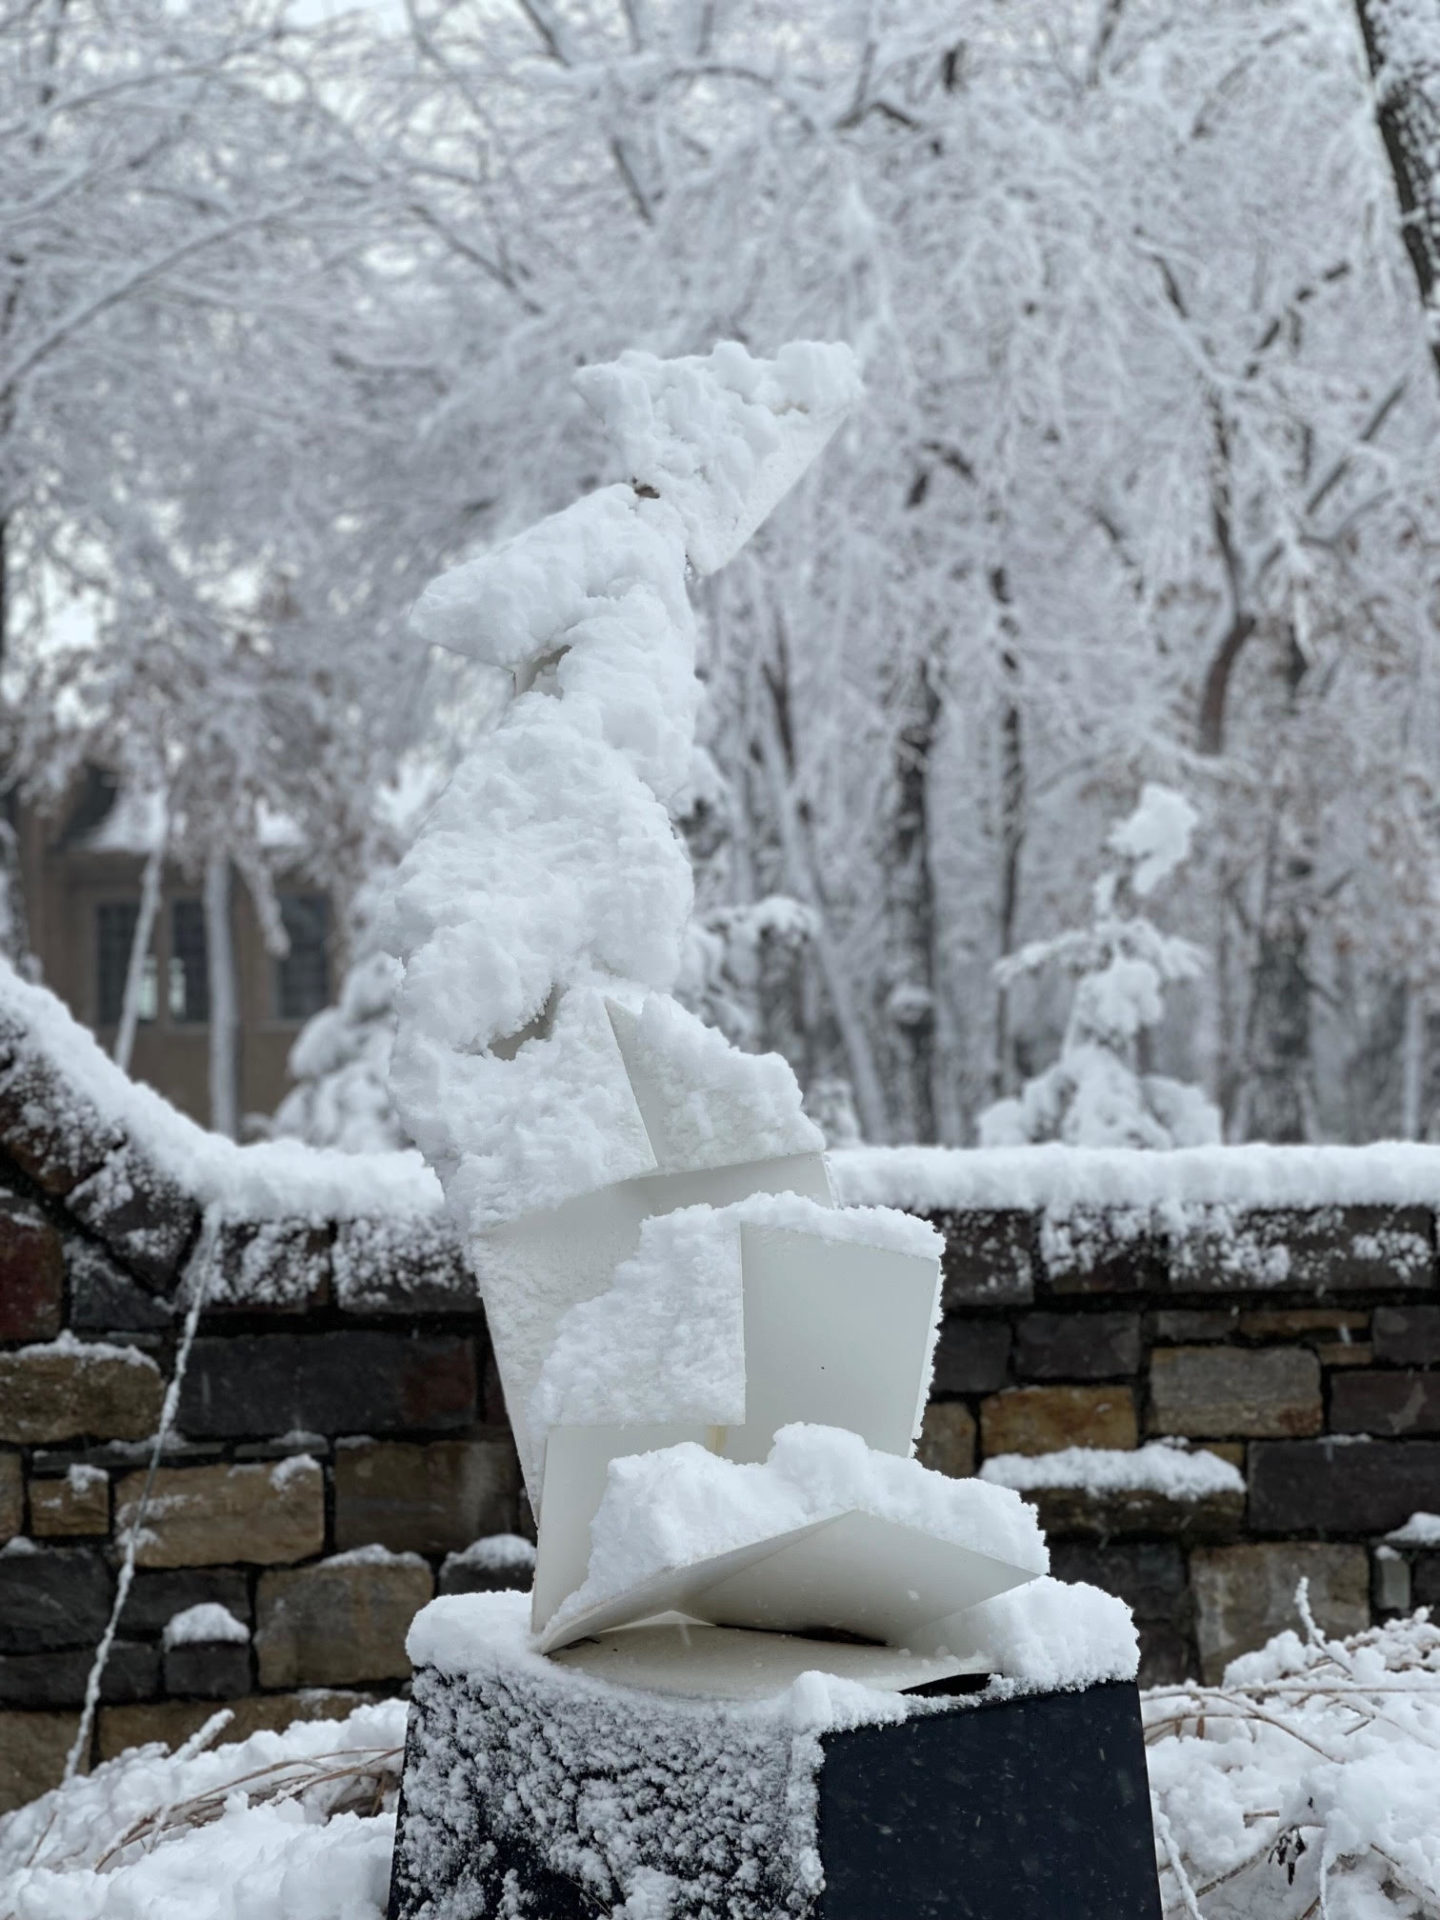 A snow covered sculpture in a garden